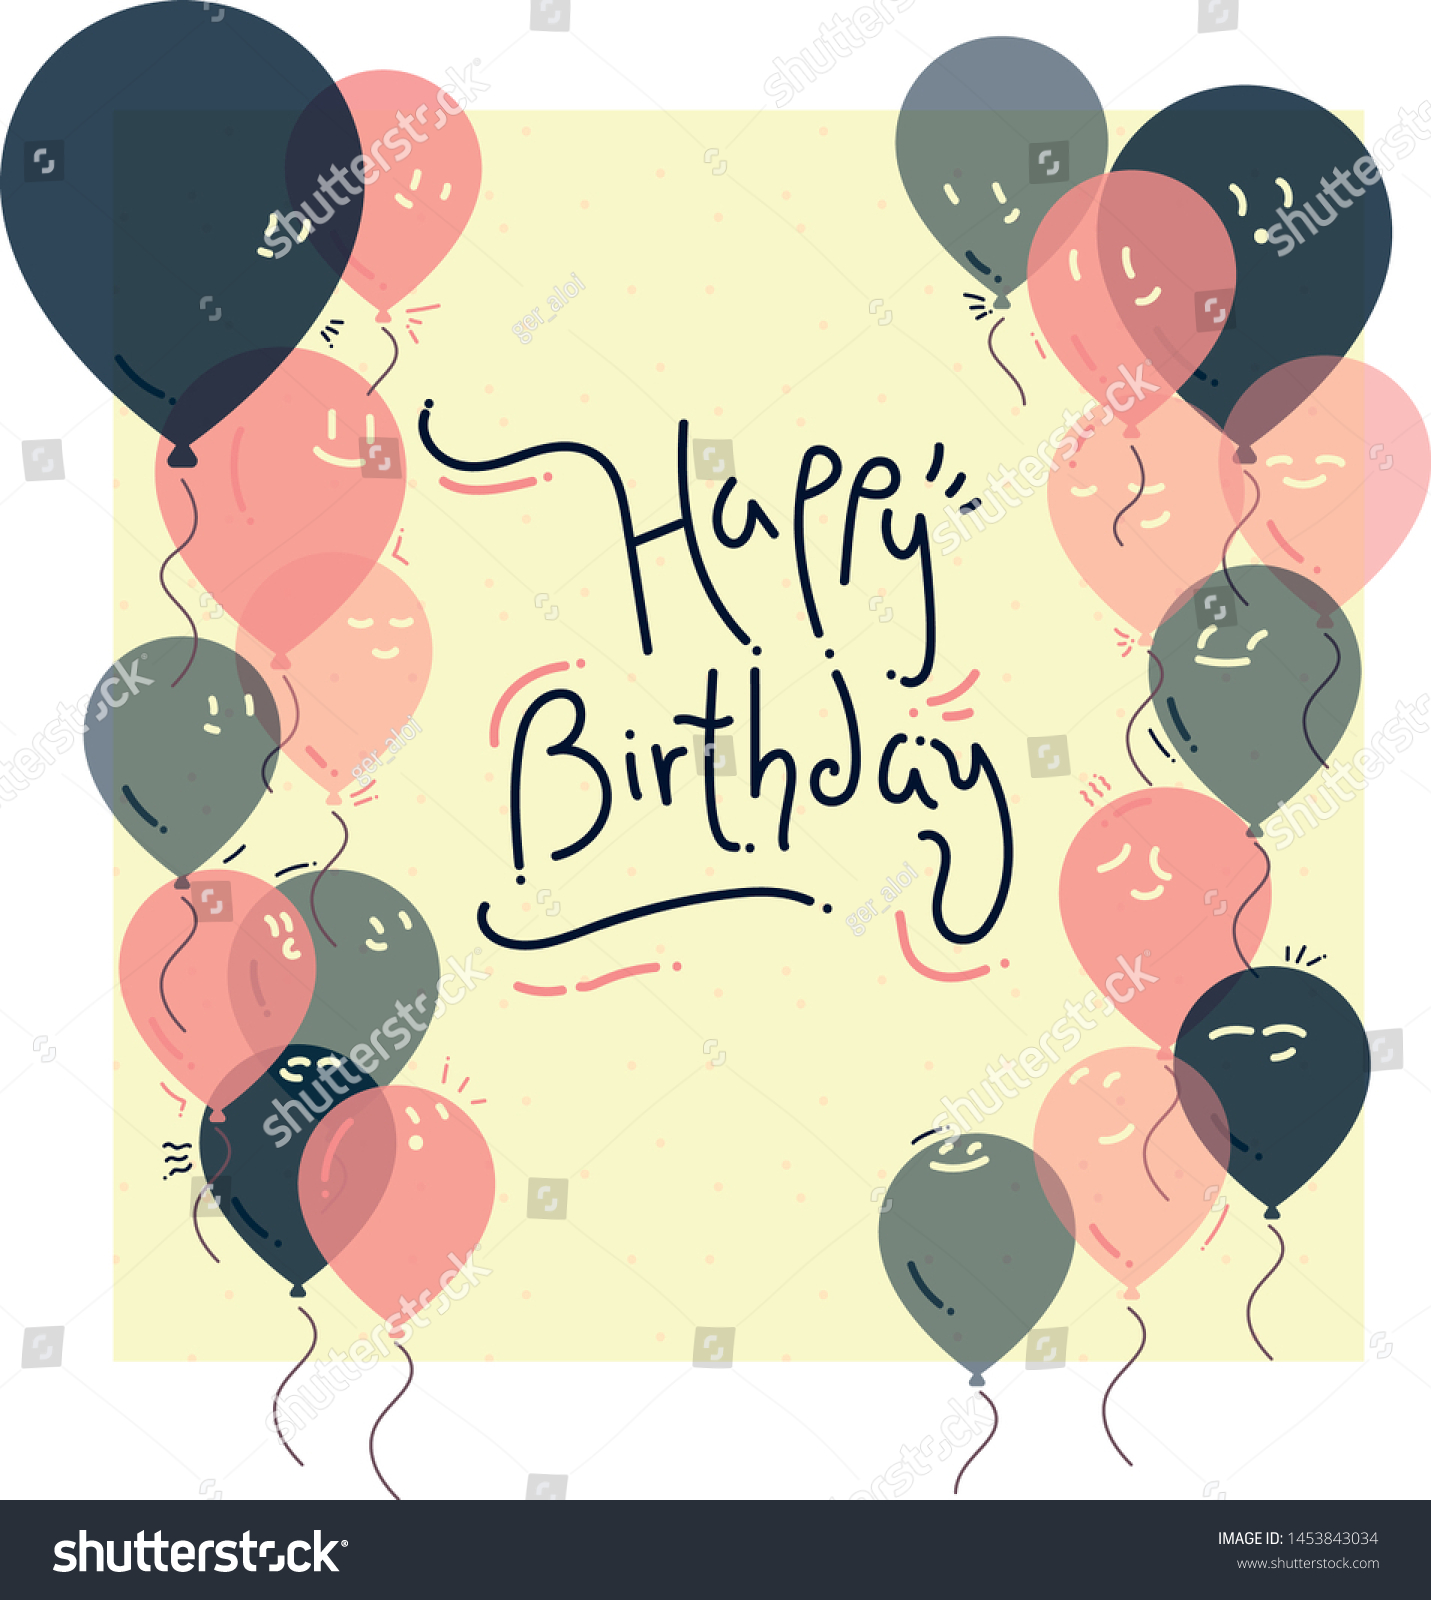 Happy Birthday Card Friends Family Office Stock Vector (Royalty